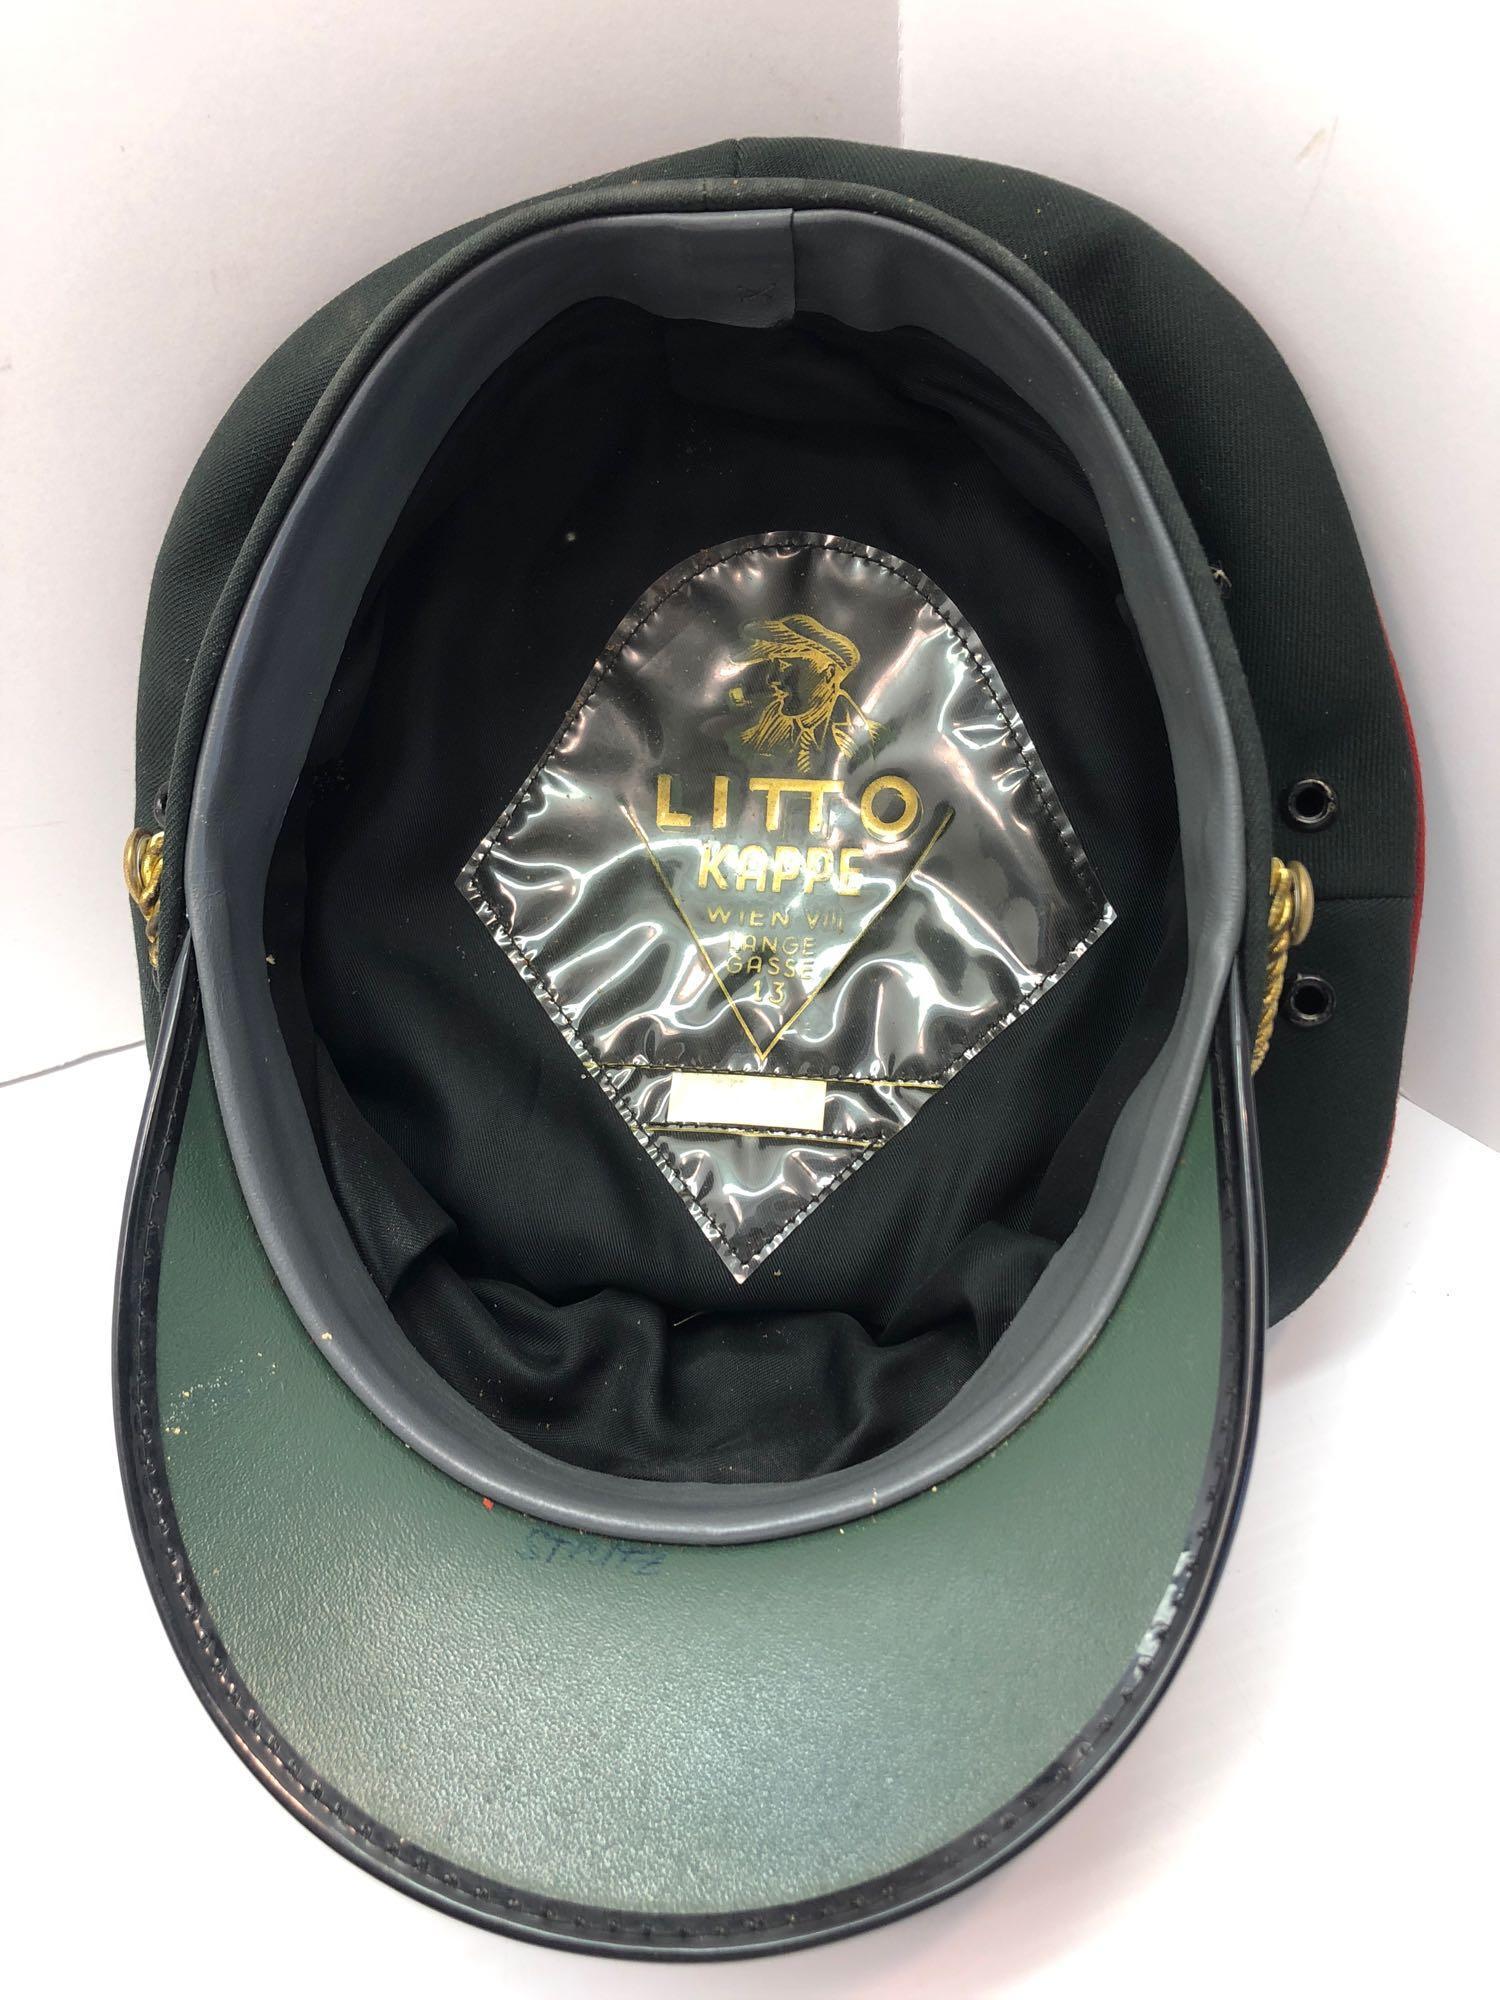 Vintage AUSTRIAN POLICE visor hat/metal insignia and gold braid